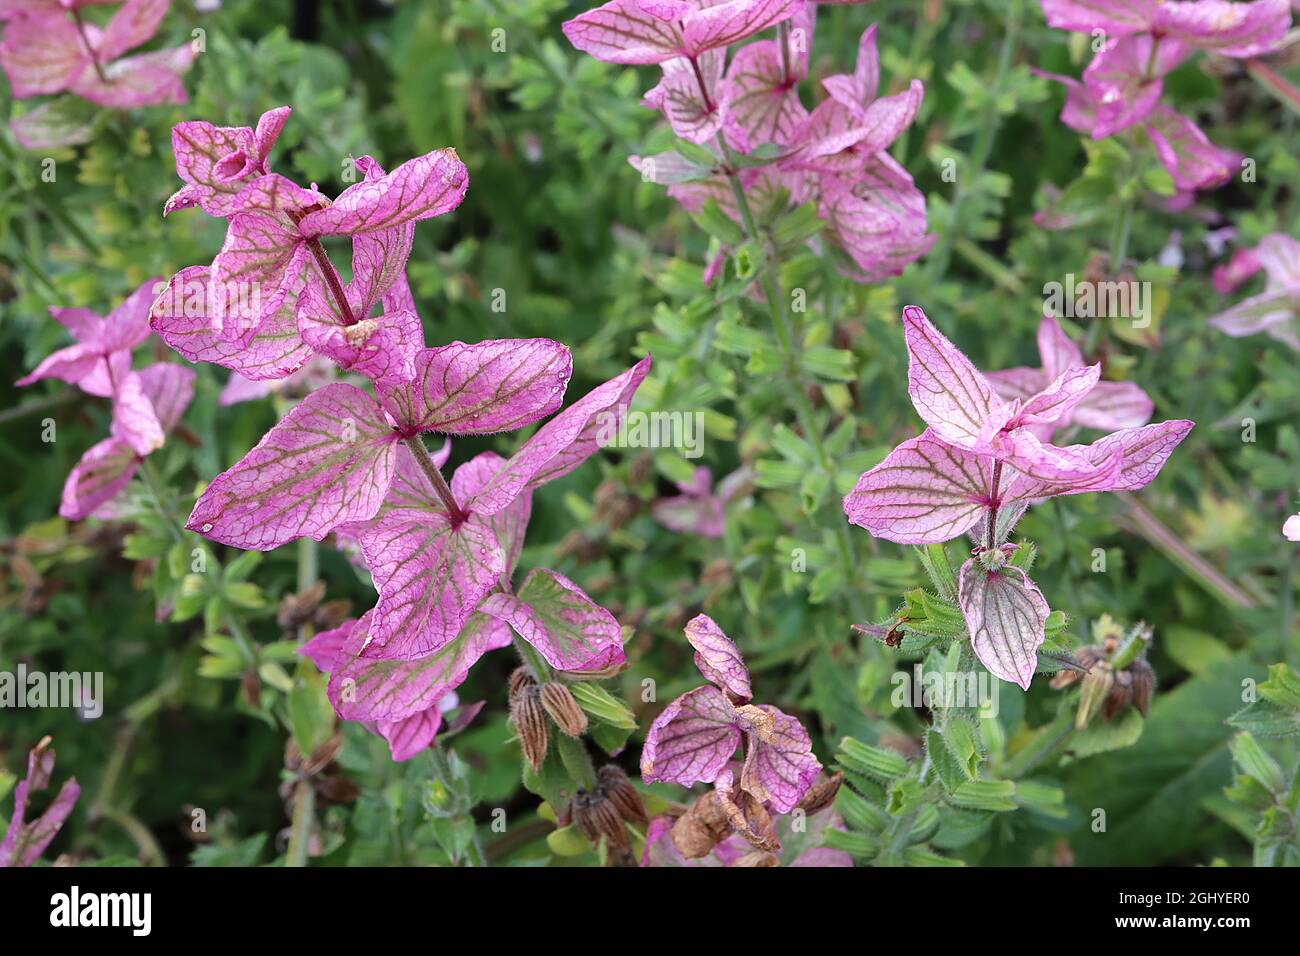 Salvia viridis ‘Claryssa Mixed’ painted sage Claryssa Mixed – medium pink bracts with green veins and tiny flowers,  August, England, UK Stock Photo